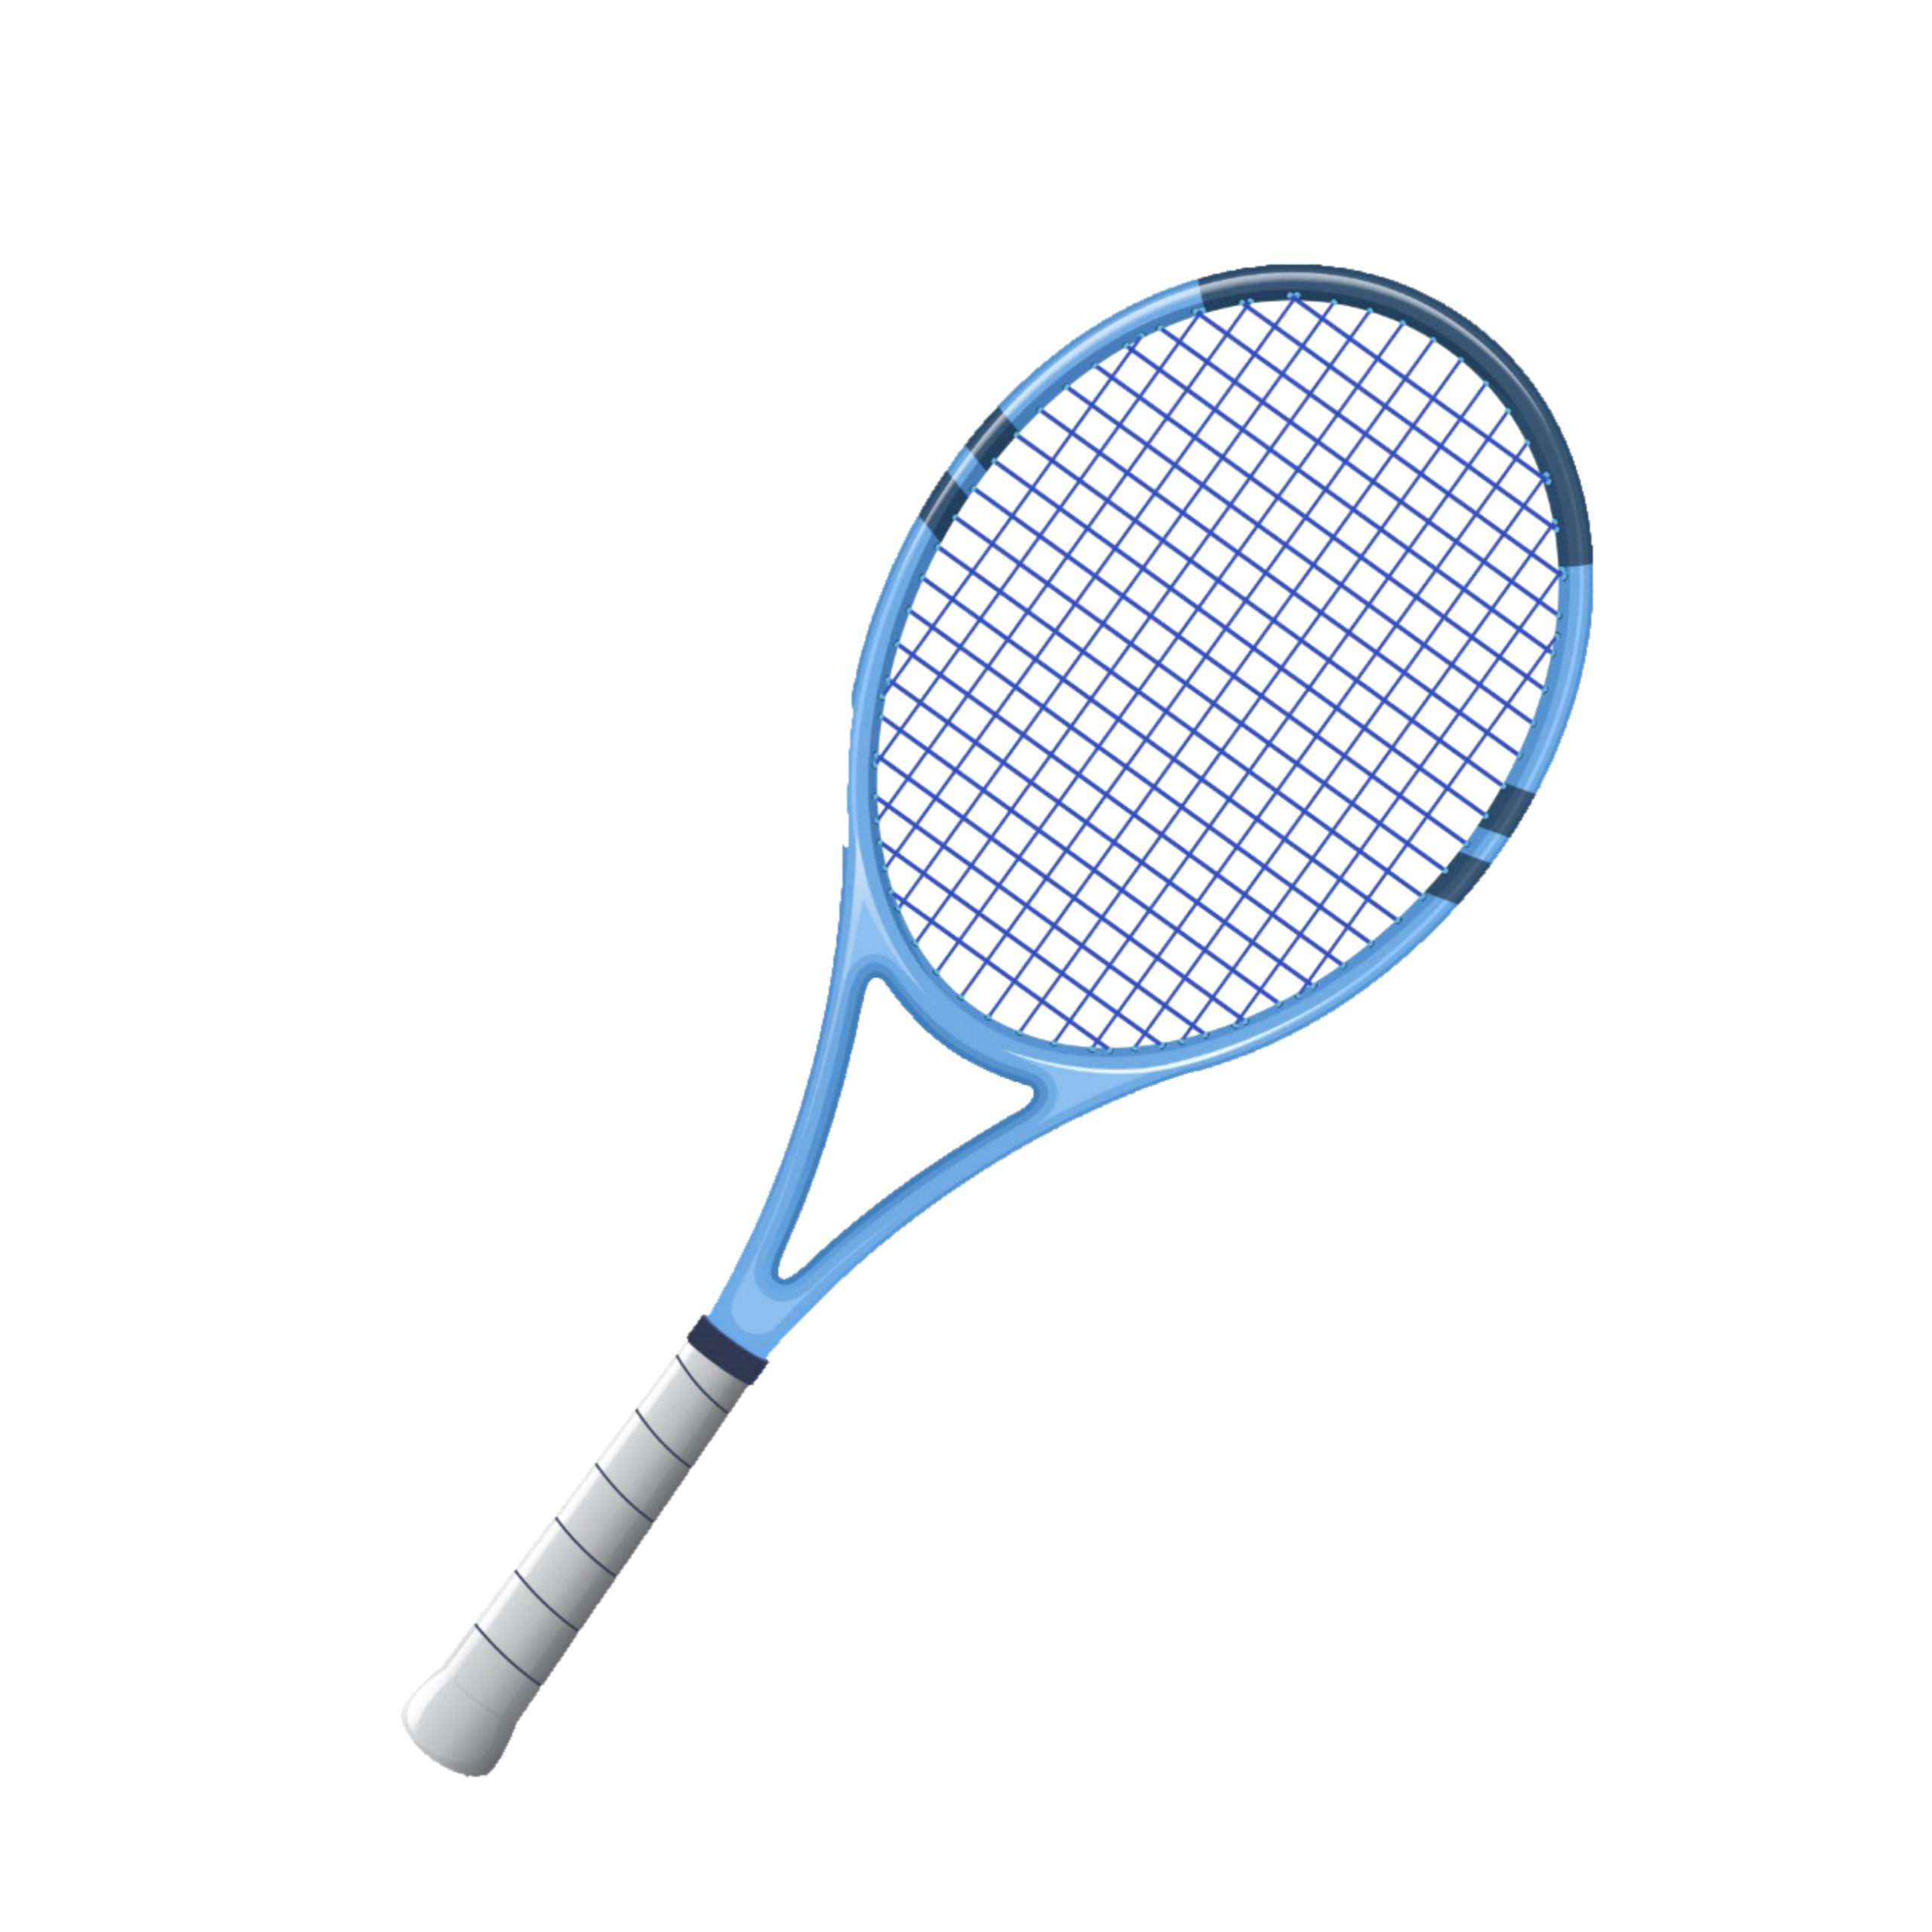 tennis-racket-16